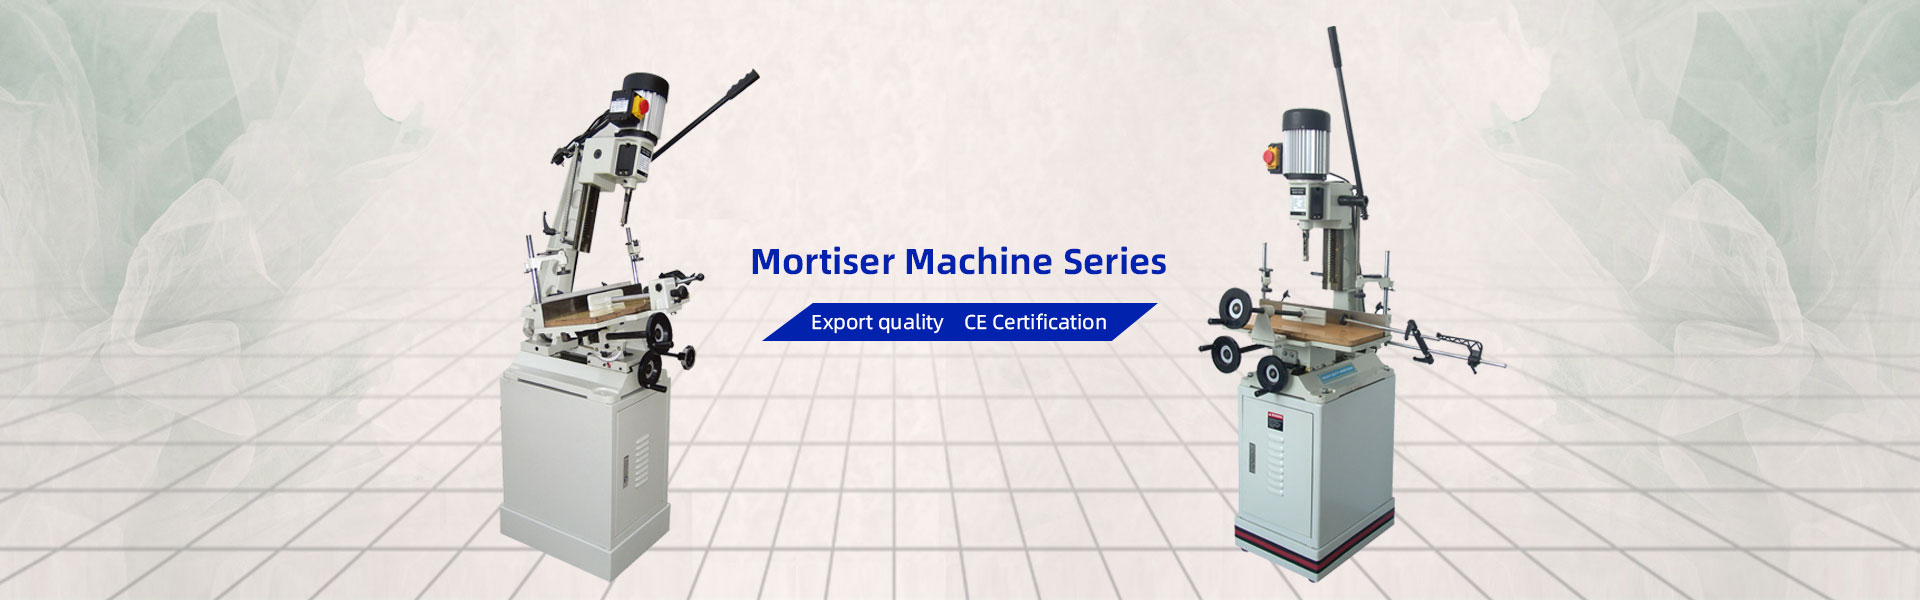 Mortiser Machine Series